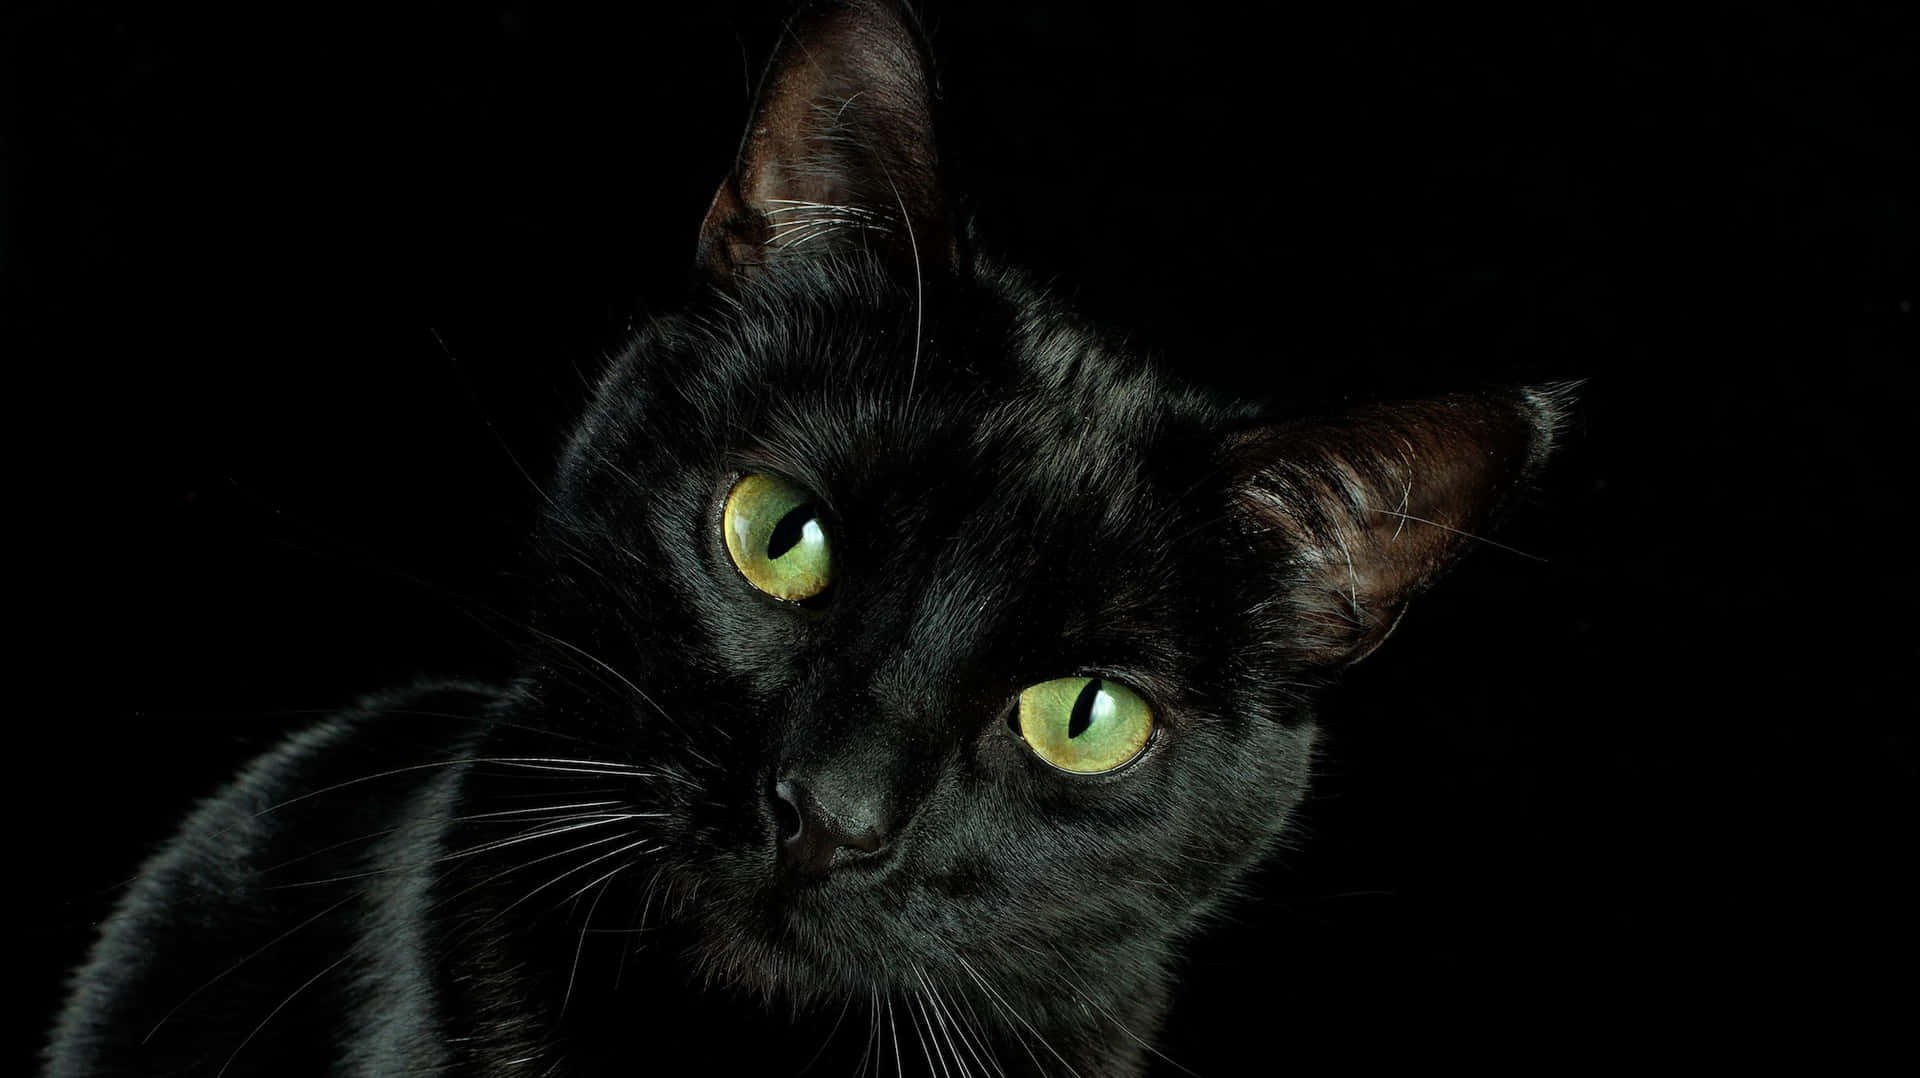 Meet Midnight, my precious black cat